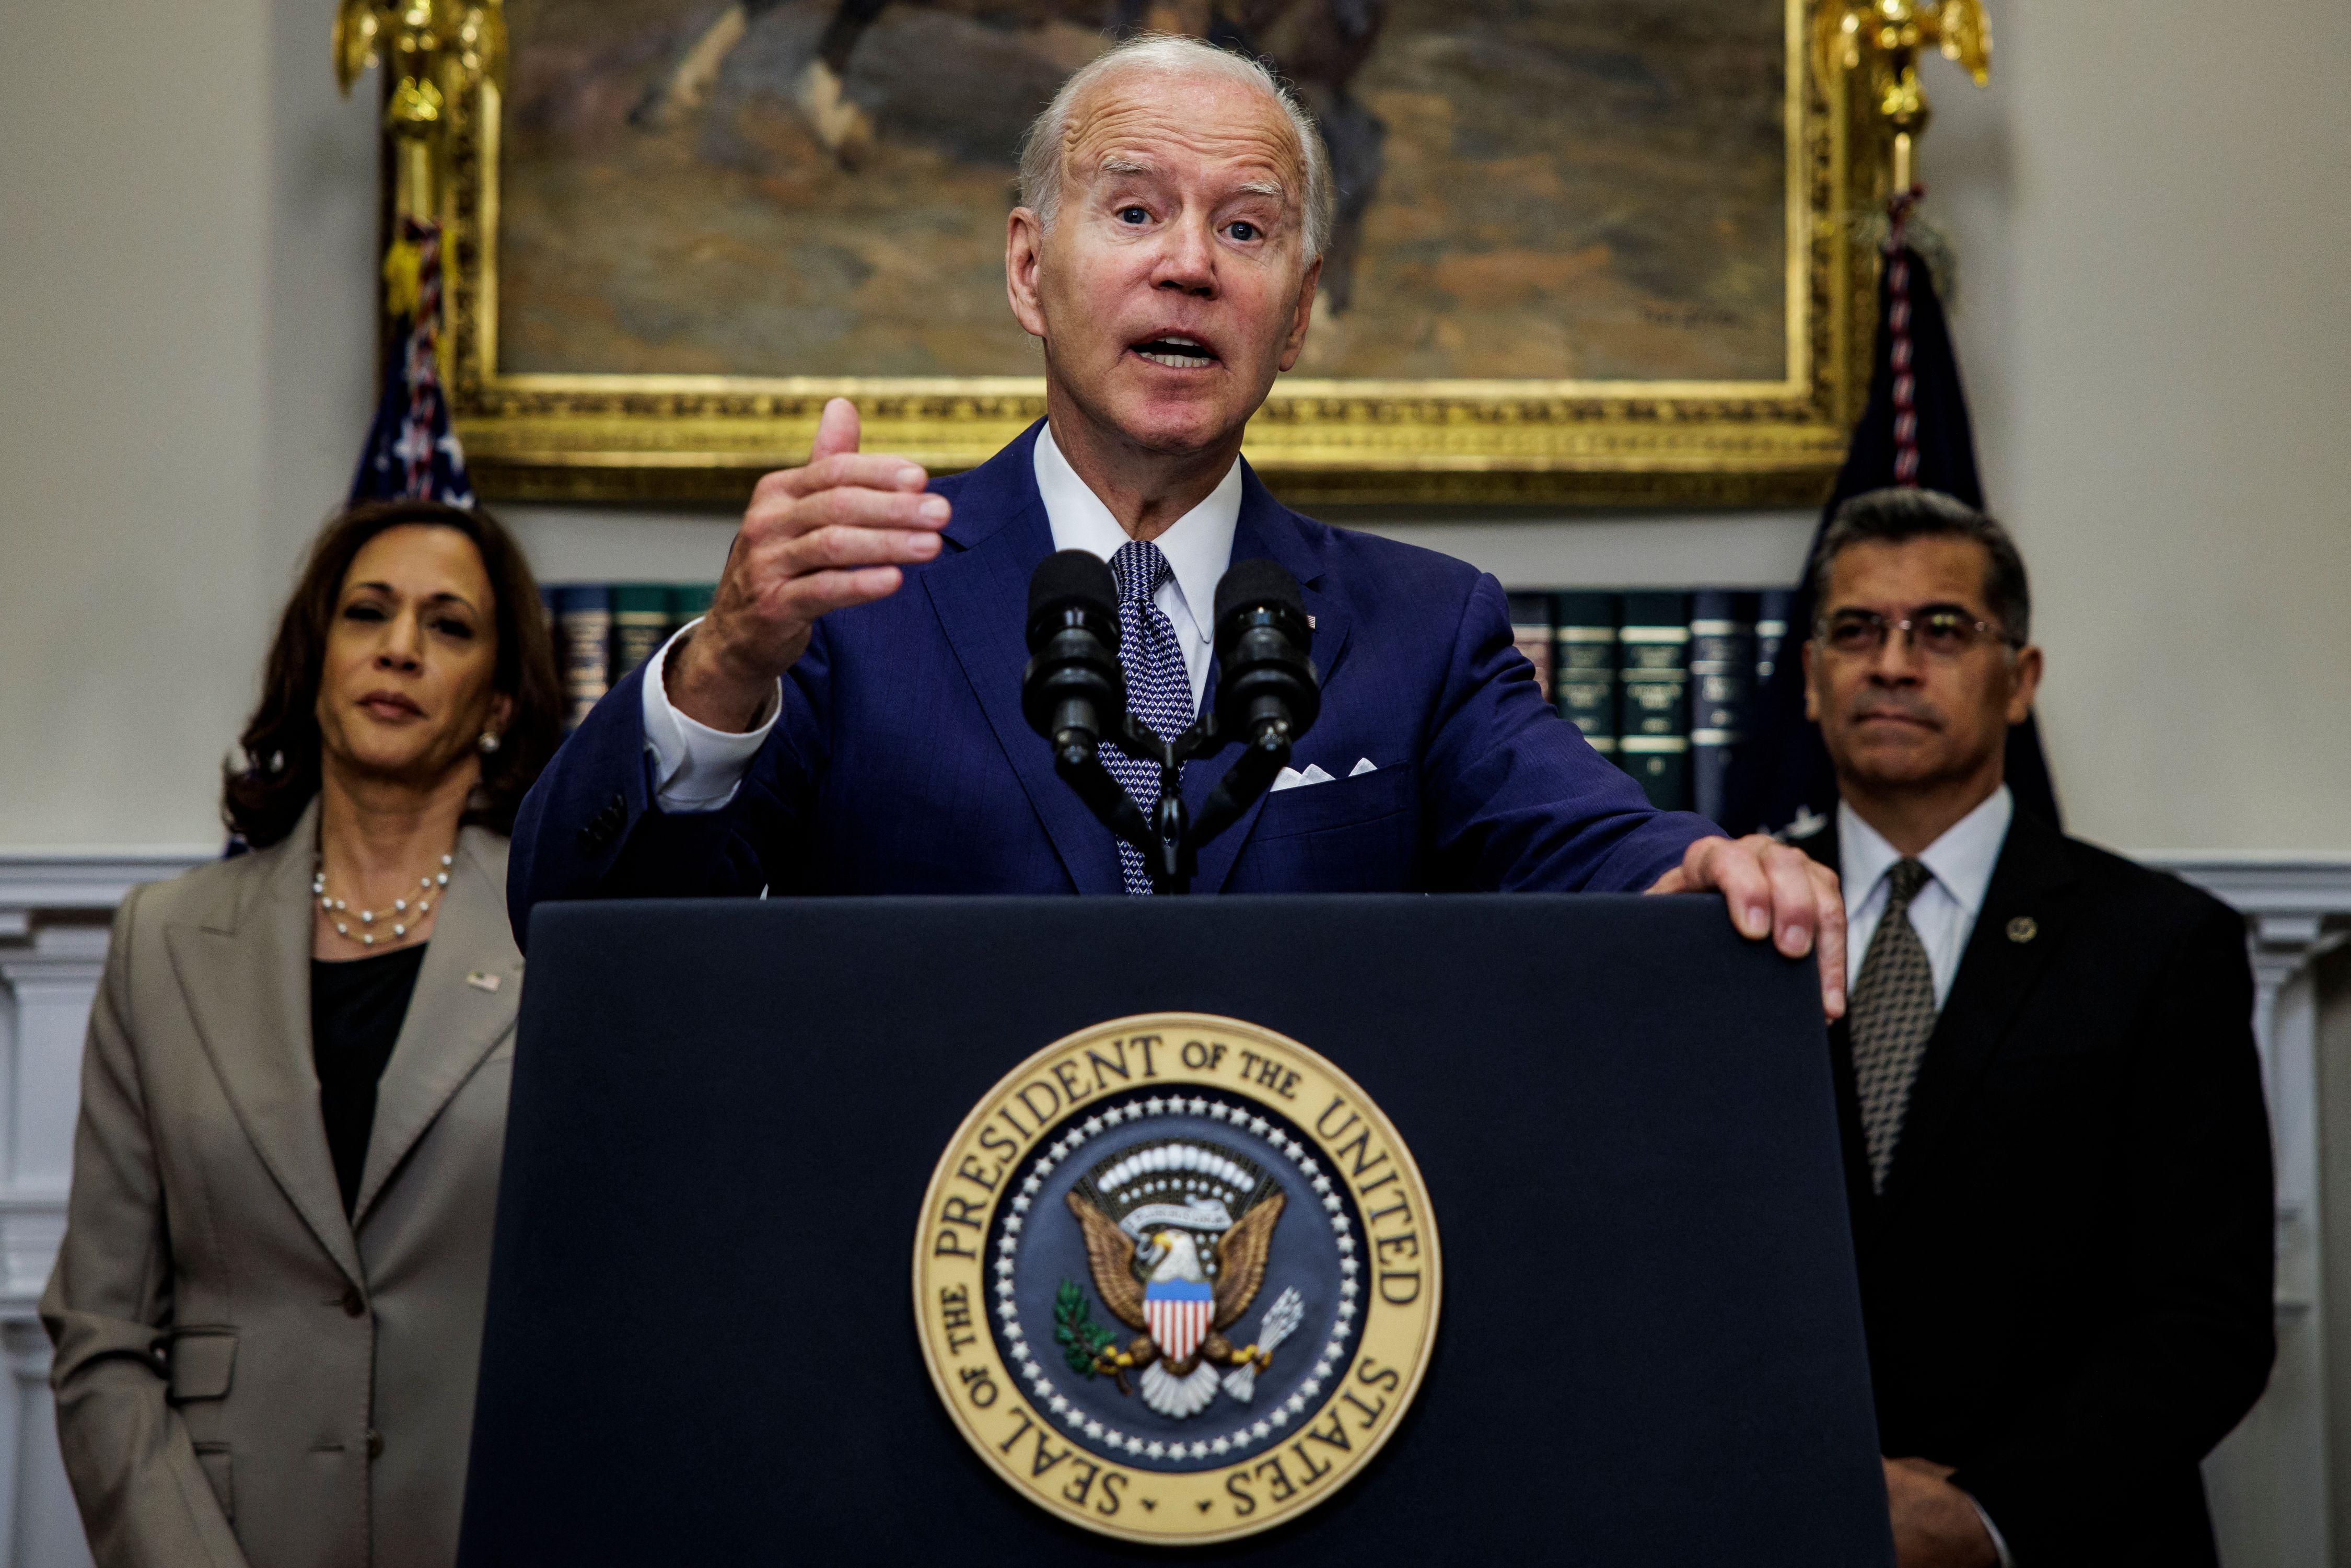 Joe Biden gestures while speaking at a podium next to Harris and Becerra.